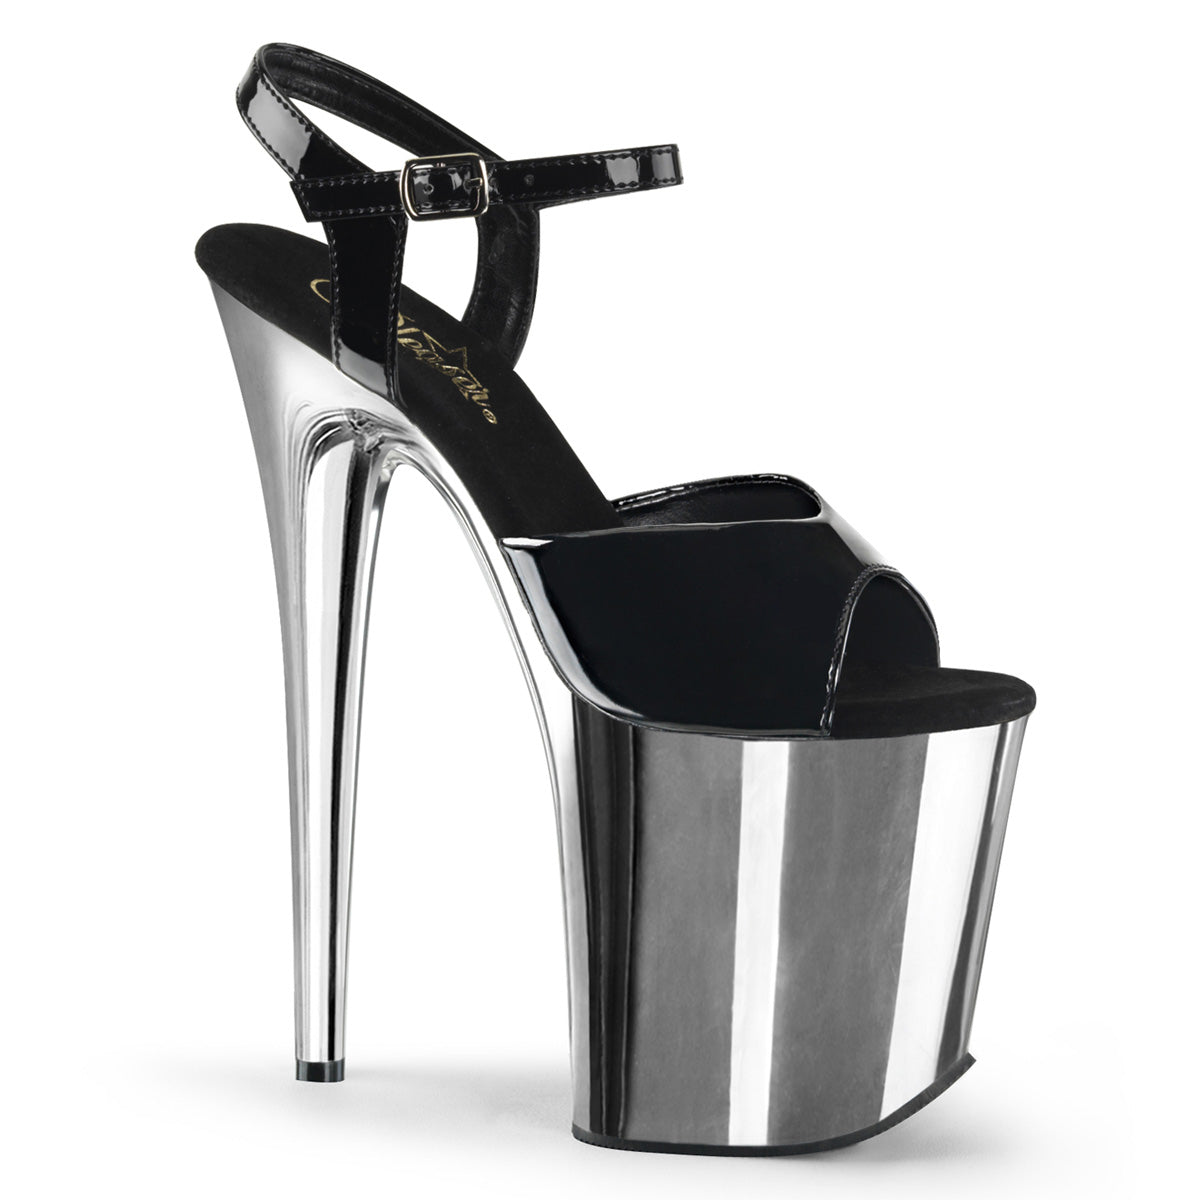 FLAMINGO-809 Black & Silver Ankle Peep Toe High Heel